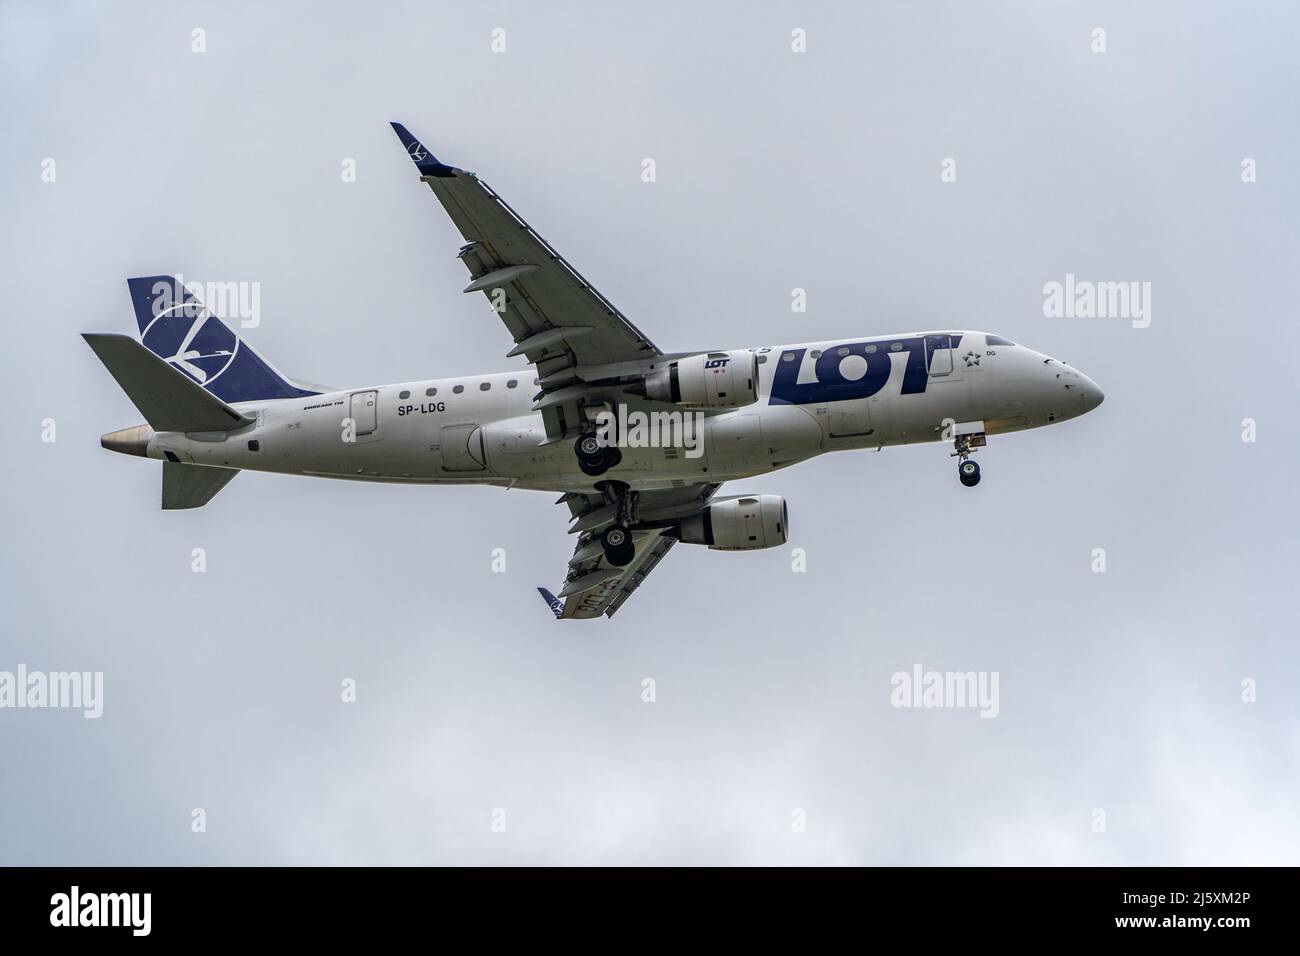 E175 LOT landing at Warsaw Chopin Airport Stock Photo